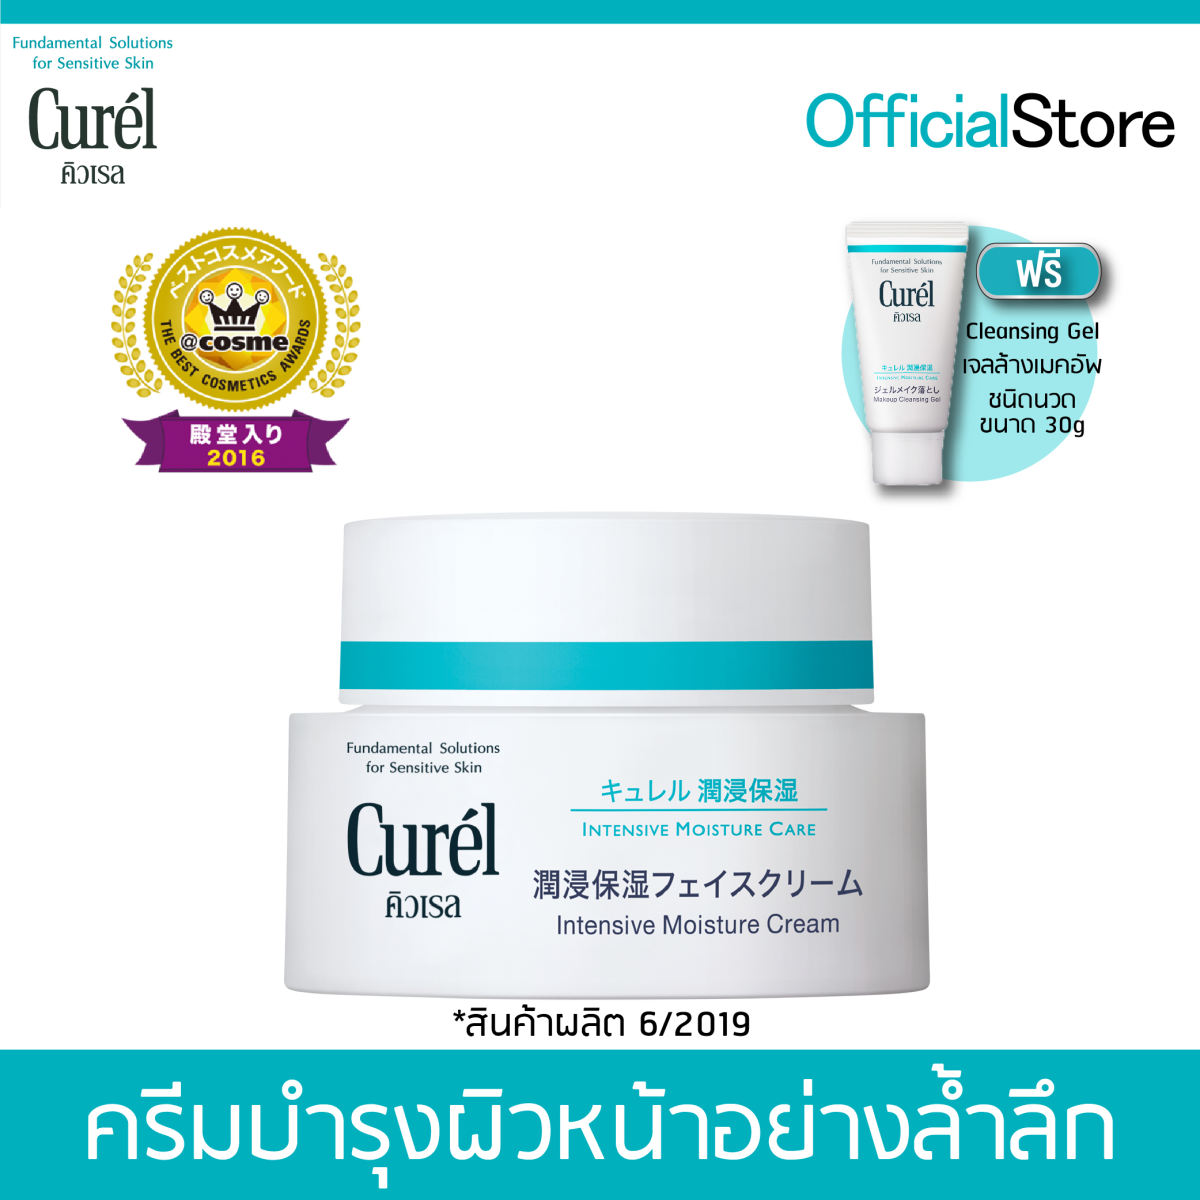 Curel INTENSIVE MOISTURE CARE Intensive Moisture Cream 40g free Curel INTENSIVE MOISTURE CARE Makeup Cleansing Gel 30g